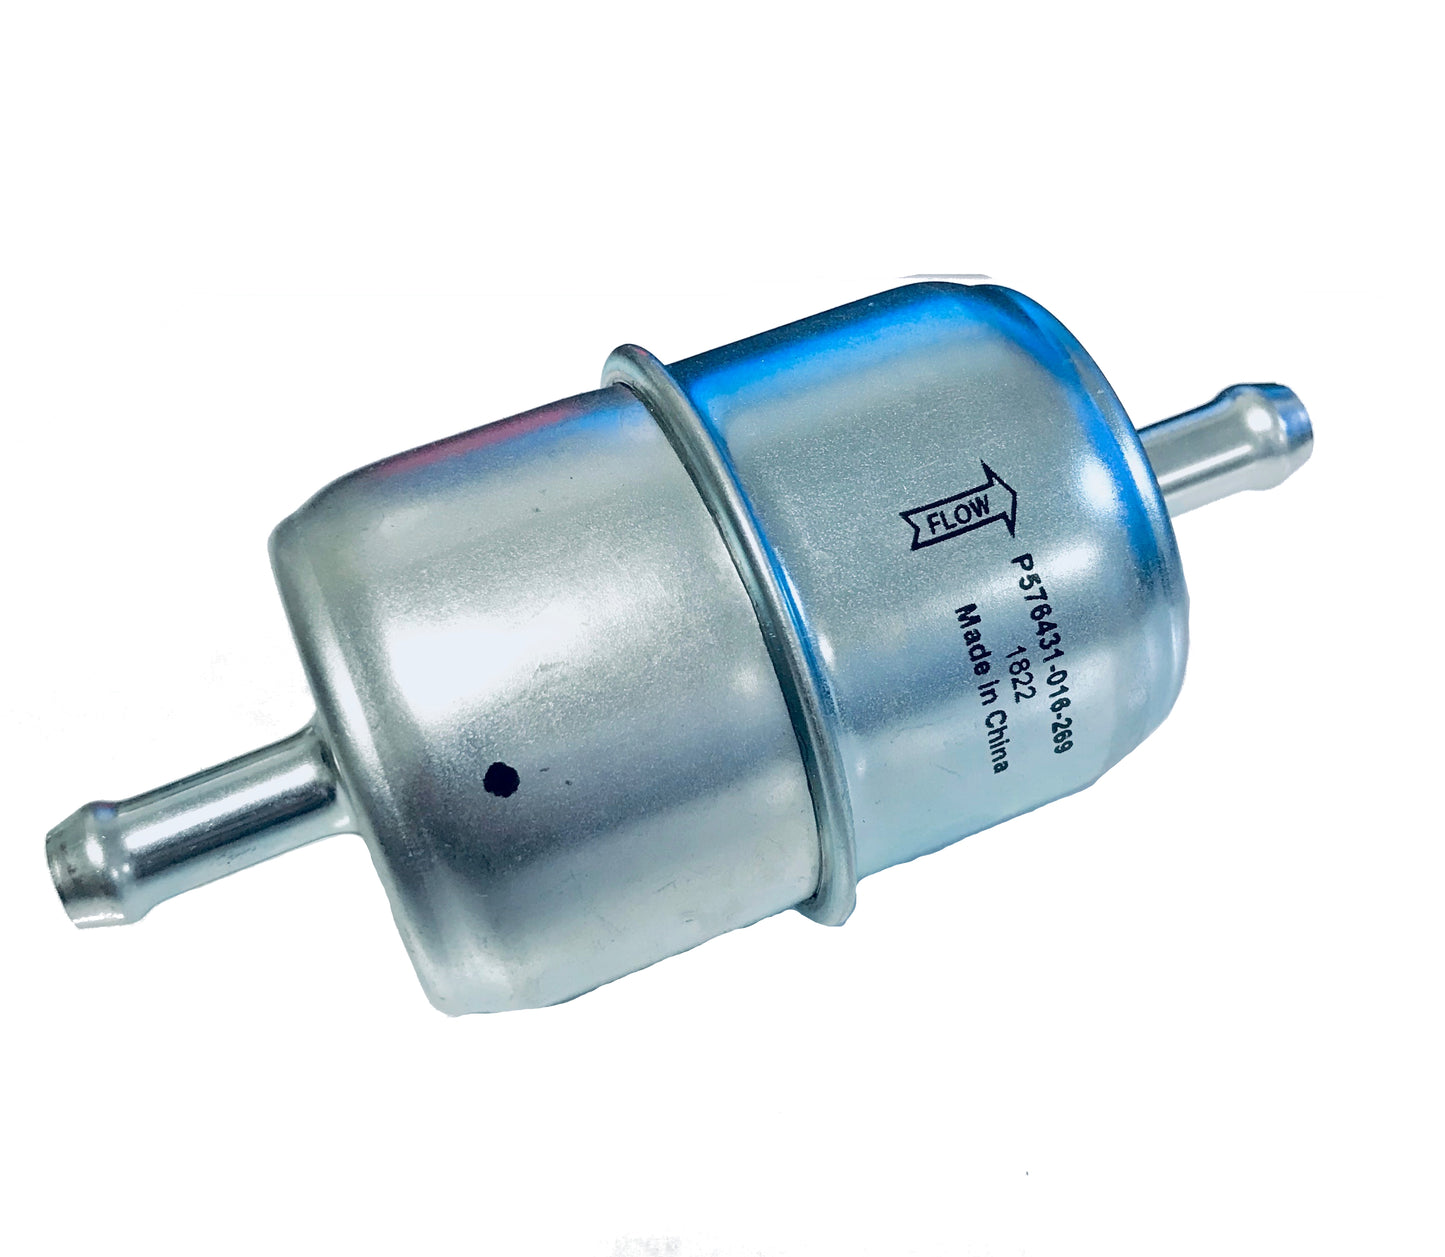 John Deere Original Equipment Fuel Filter - T257865,1